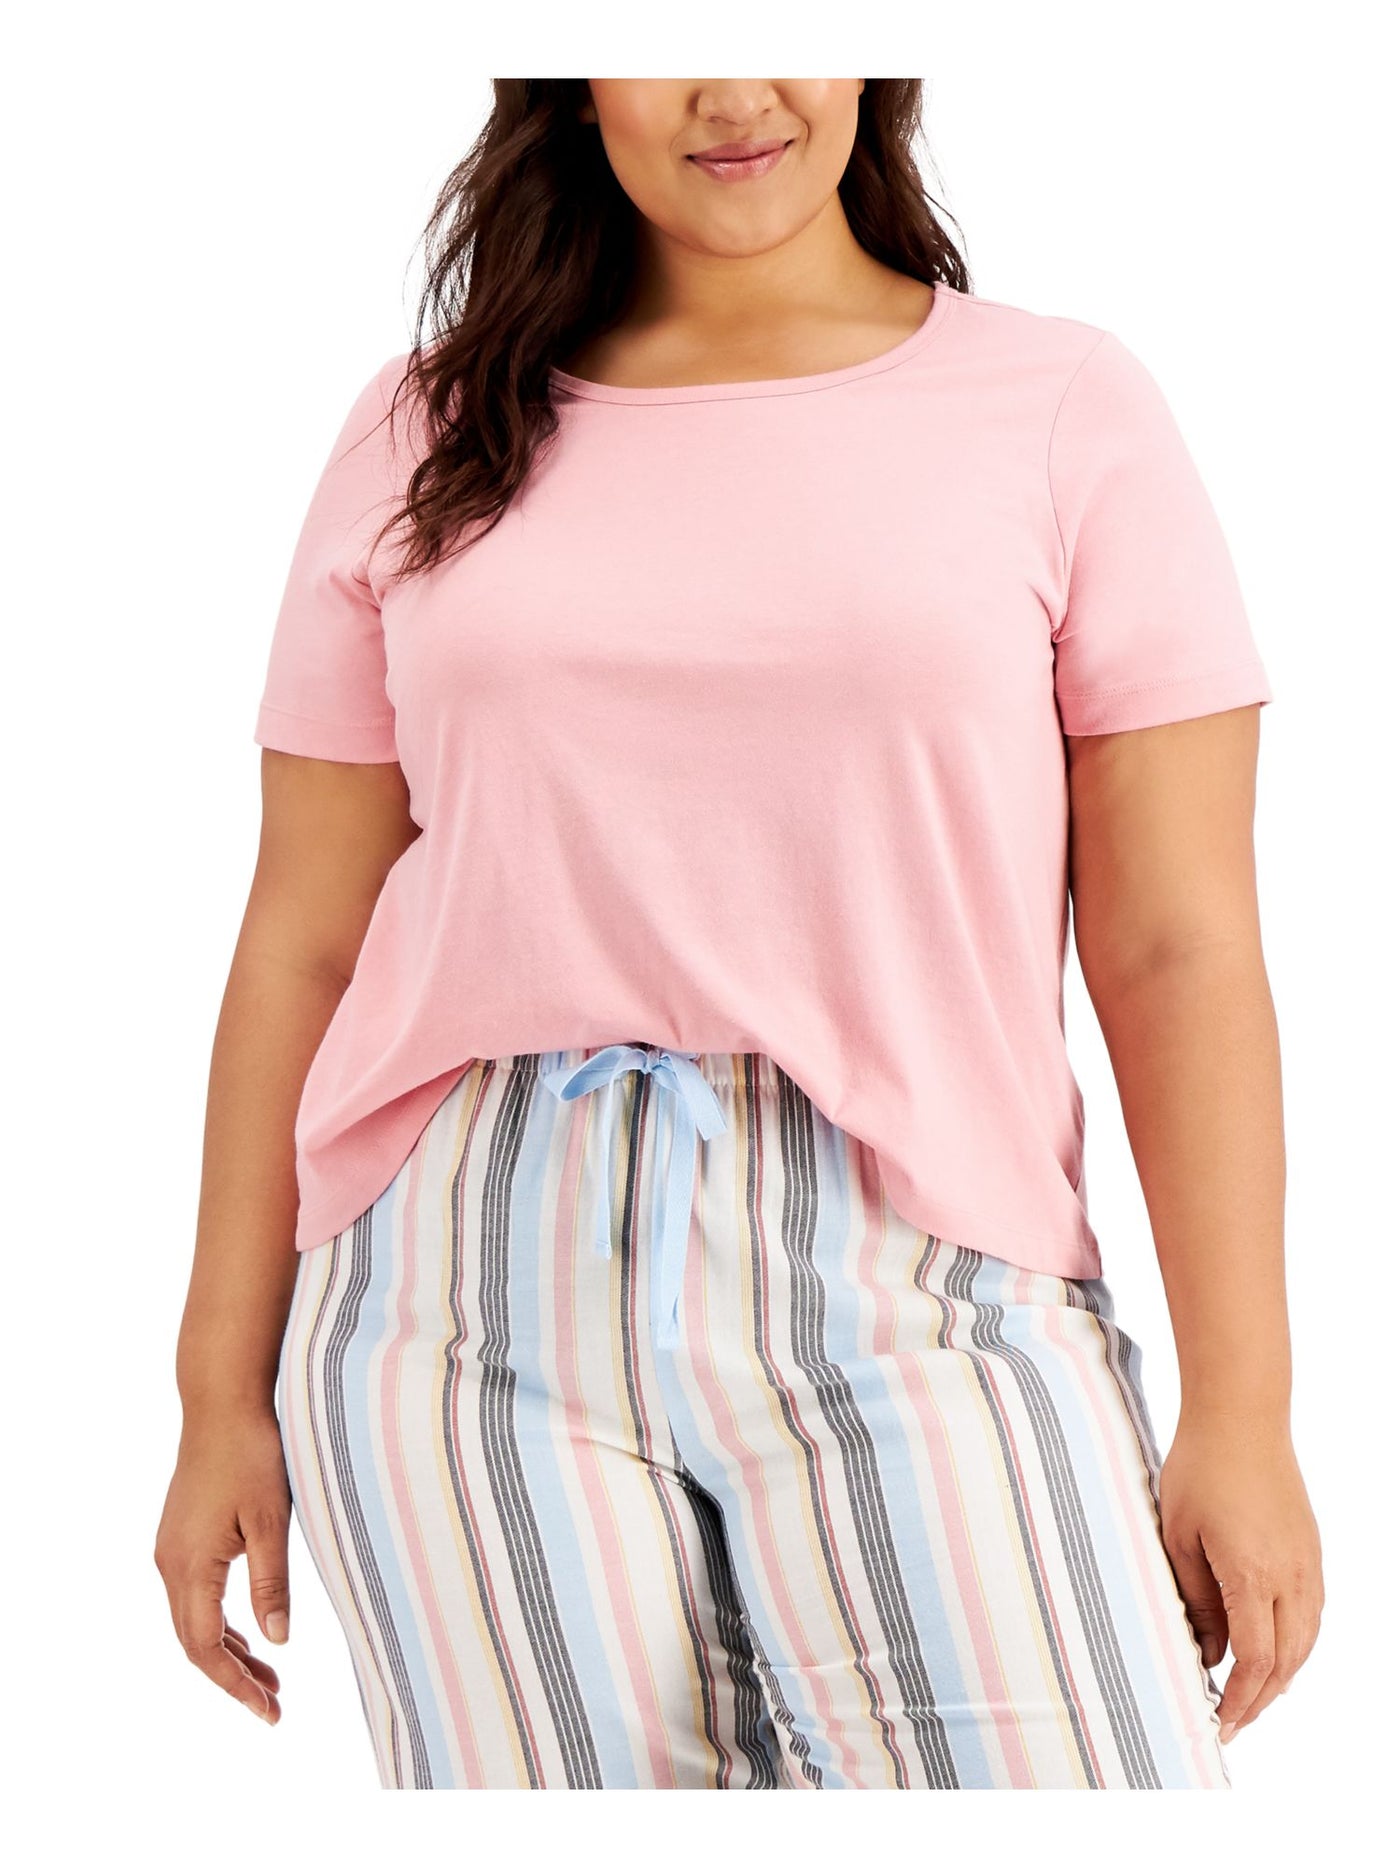 JENNI Intimates Pink Cotton Blend Short Sleeves Rib-Knit Trim Sleep Shirt Pajama Top Plus 2X